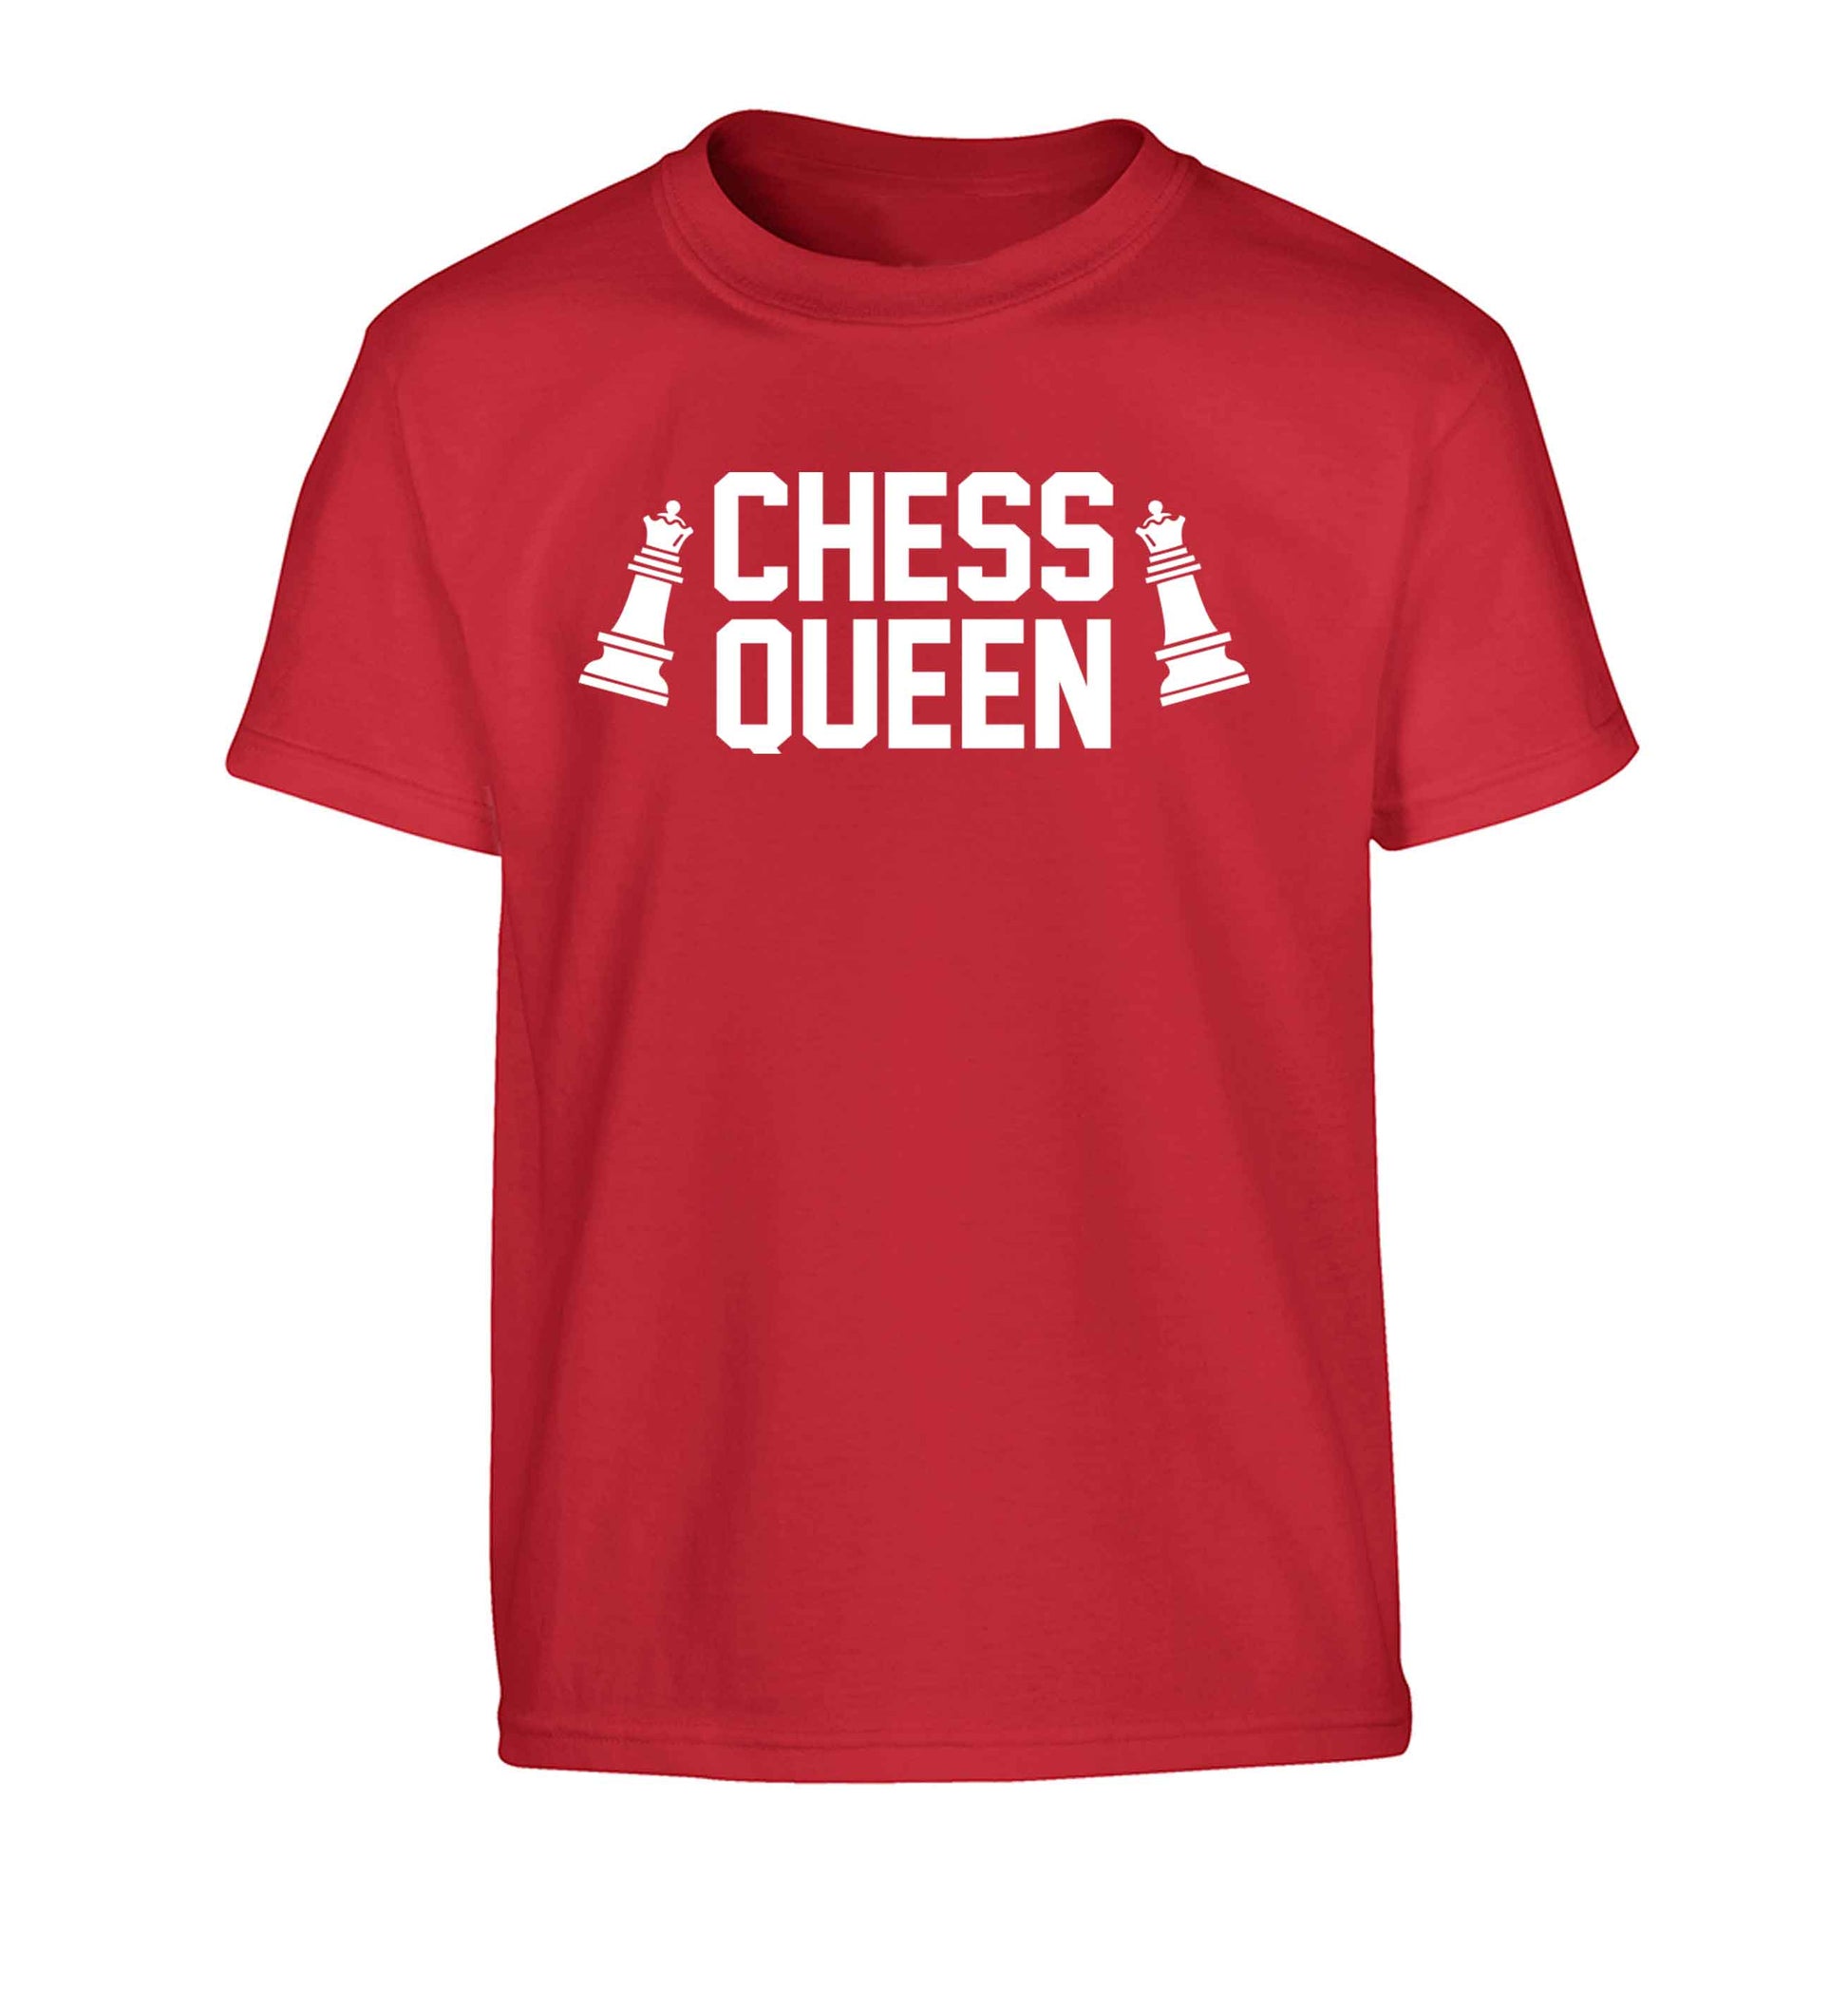 Chess queen Children's red Tshirt 12-13 Years